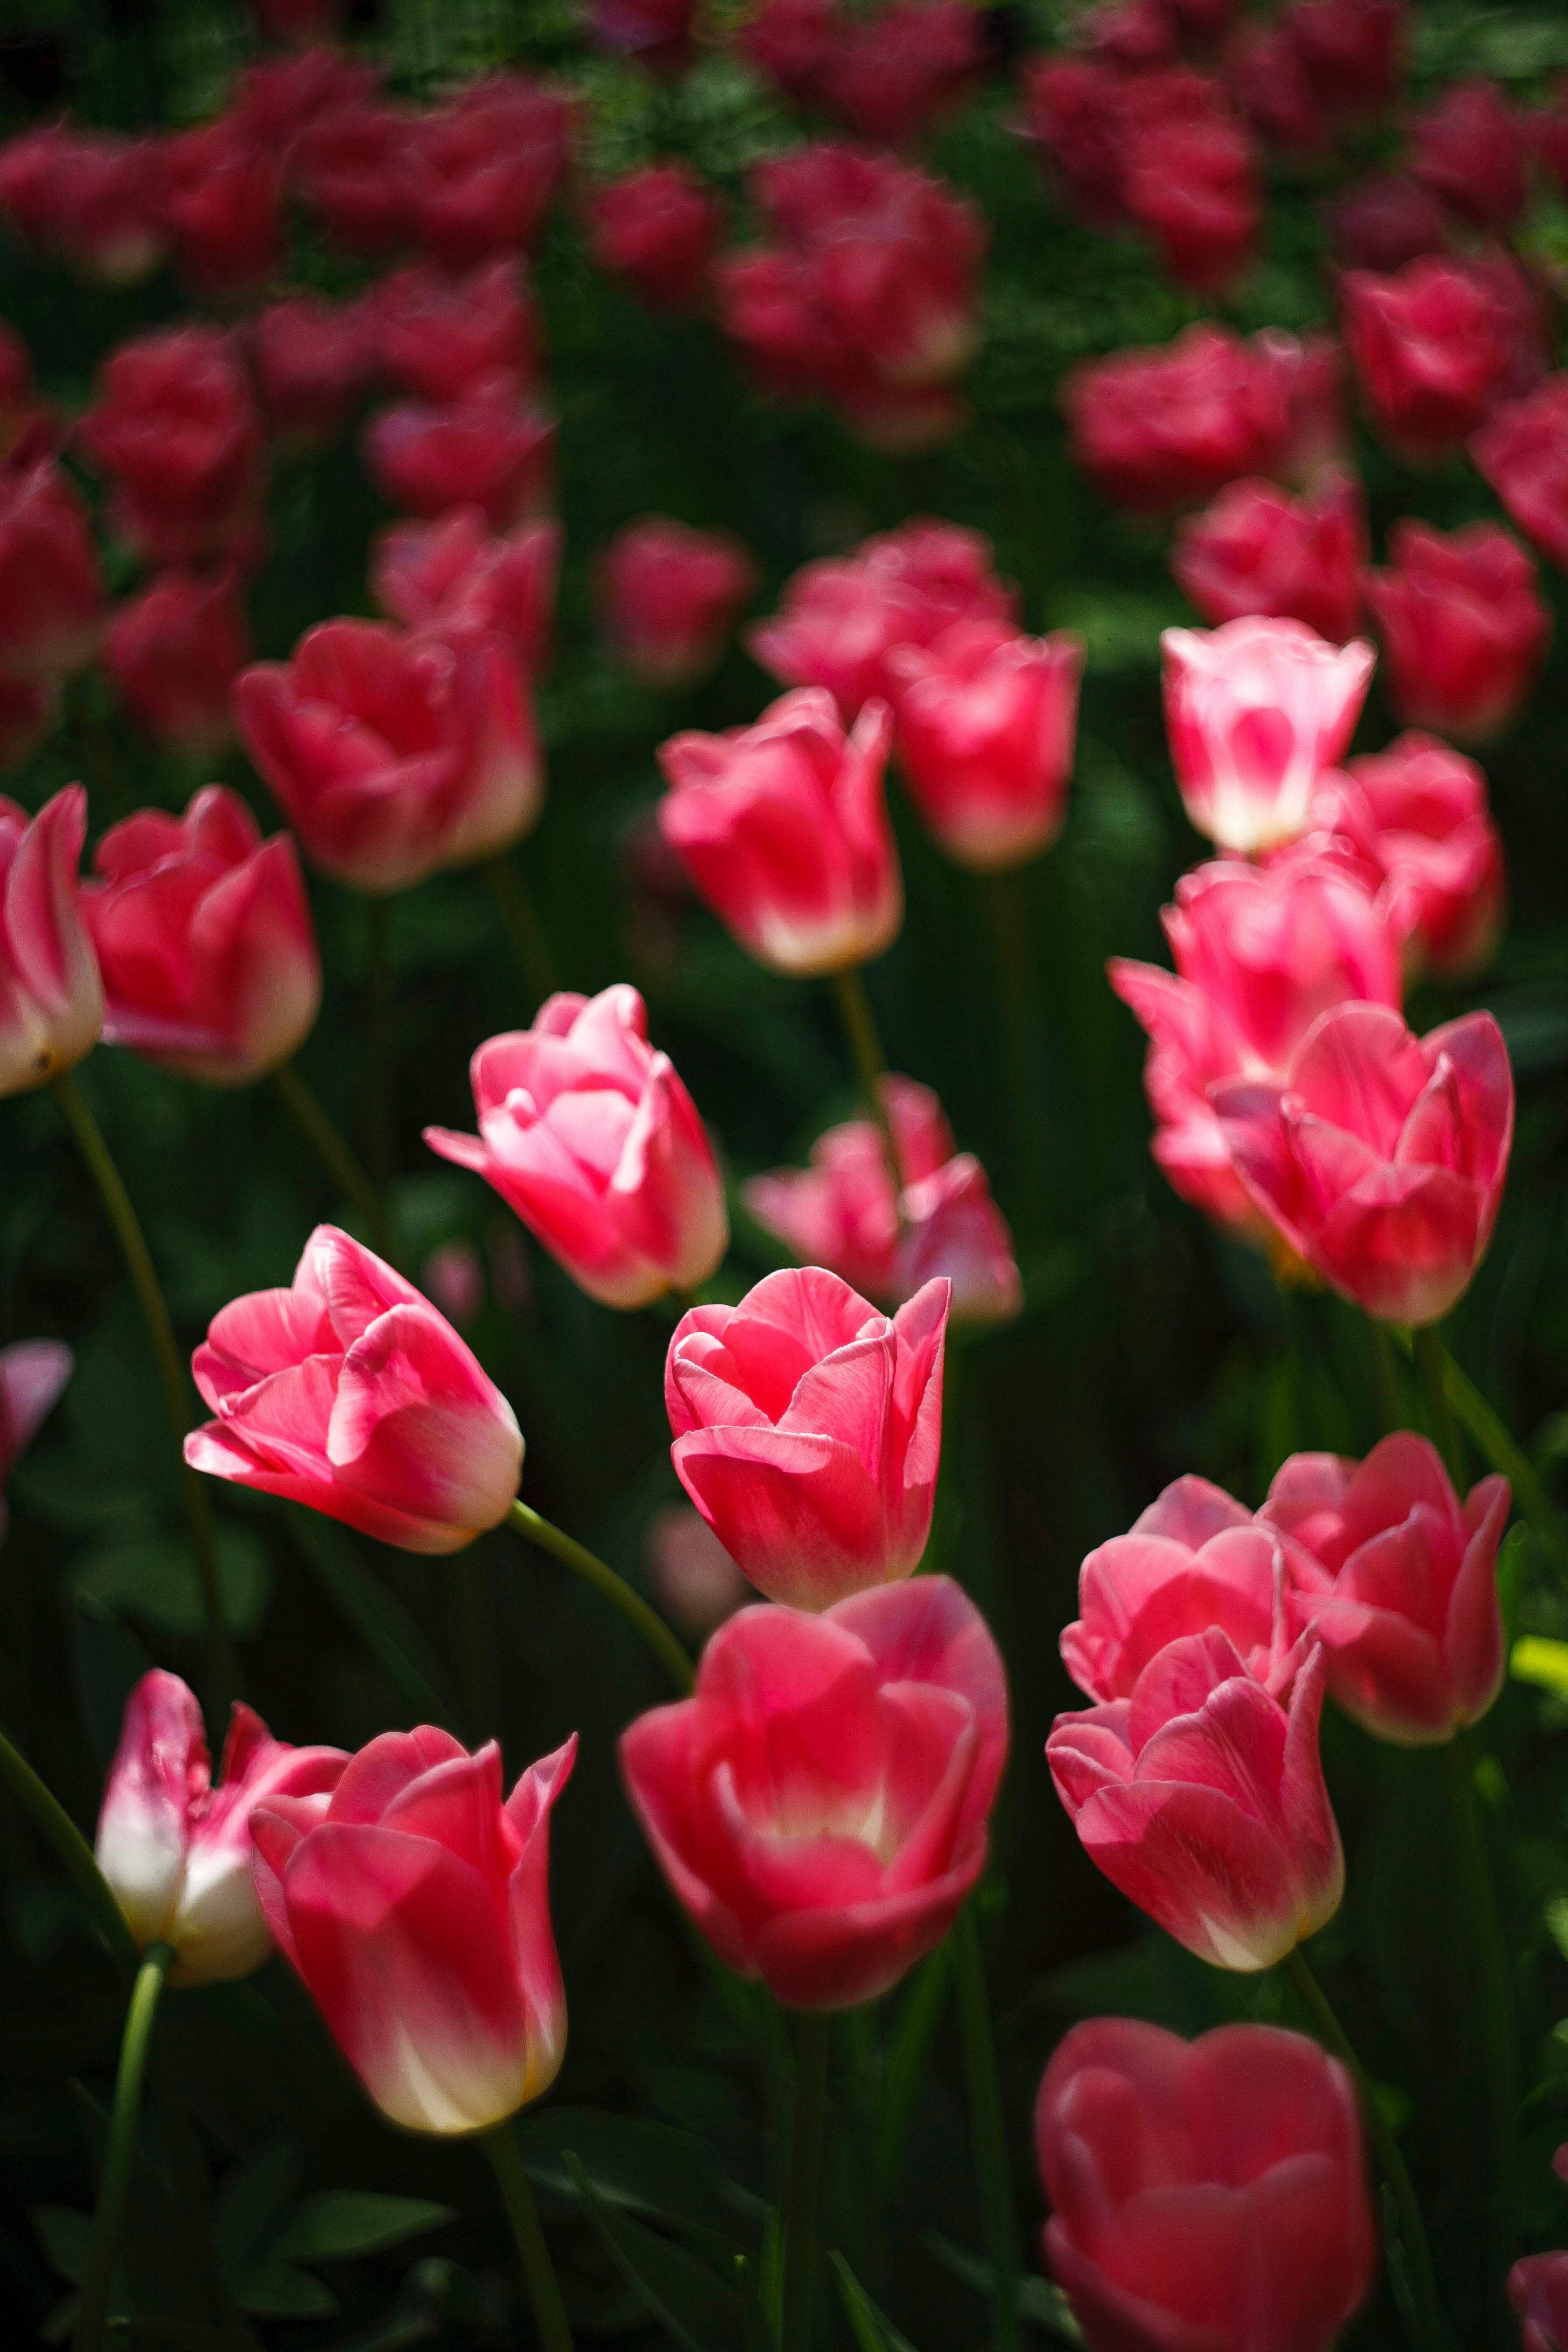 Pink Tulips by Stocksy Contributor Jovana Rikalo